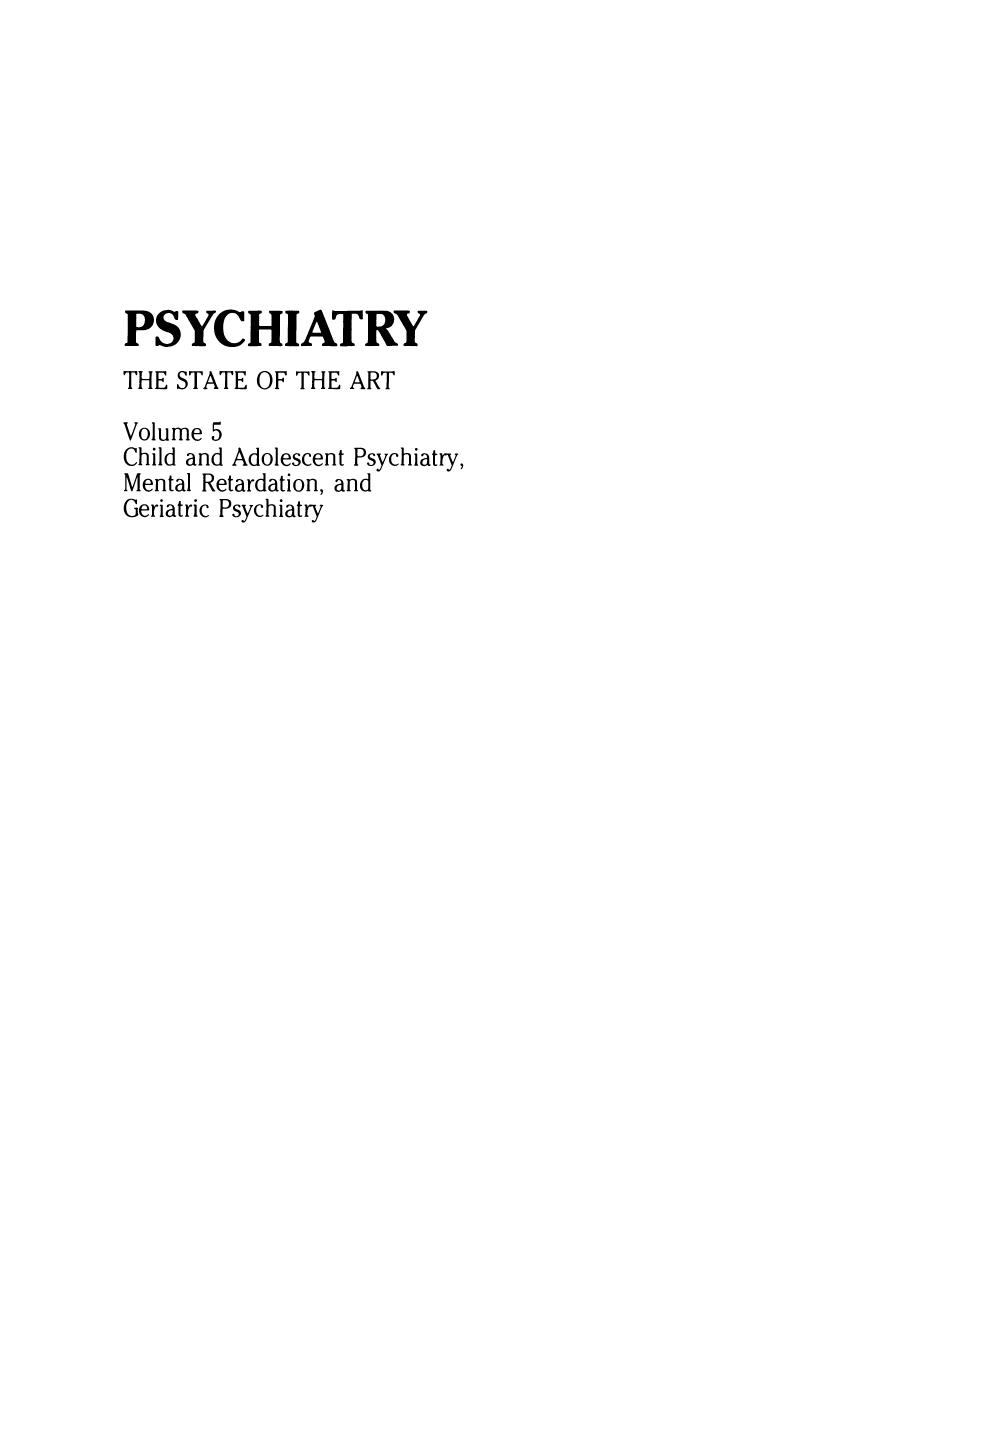 Child and Adolescent Psychiatry, Mental Retardation, and Geriatric Psychiatry Vol 5